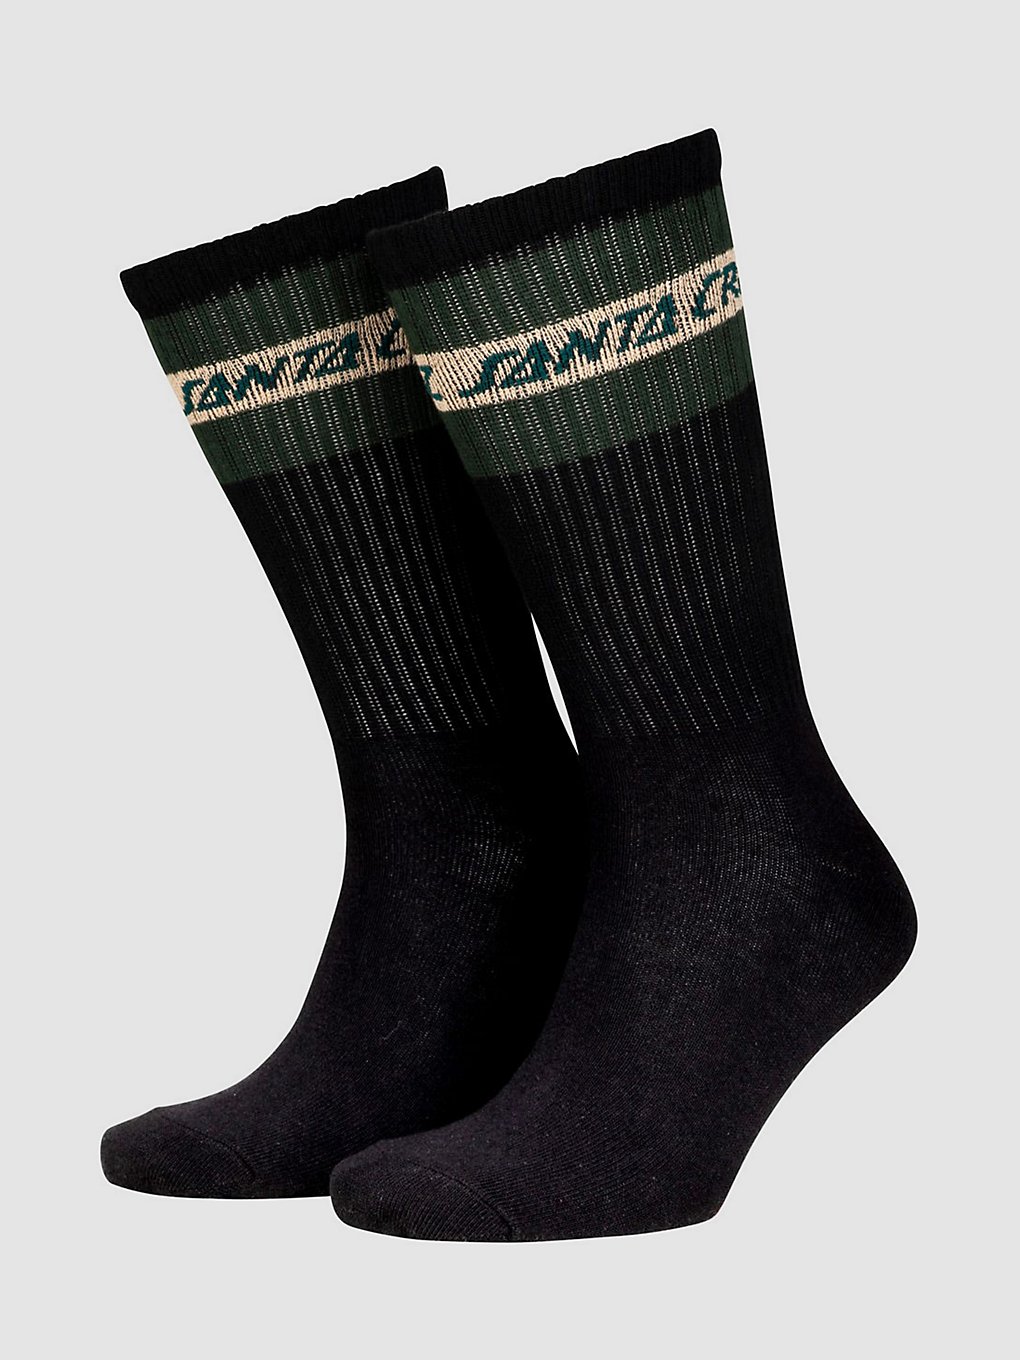 Santa Cruz Boardwalk Socken black kaufen